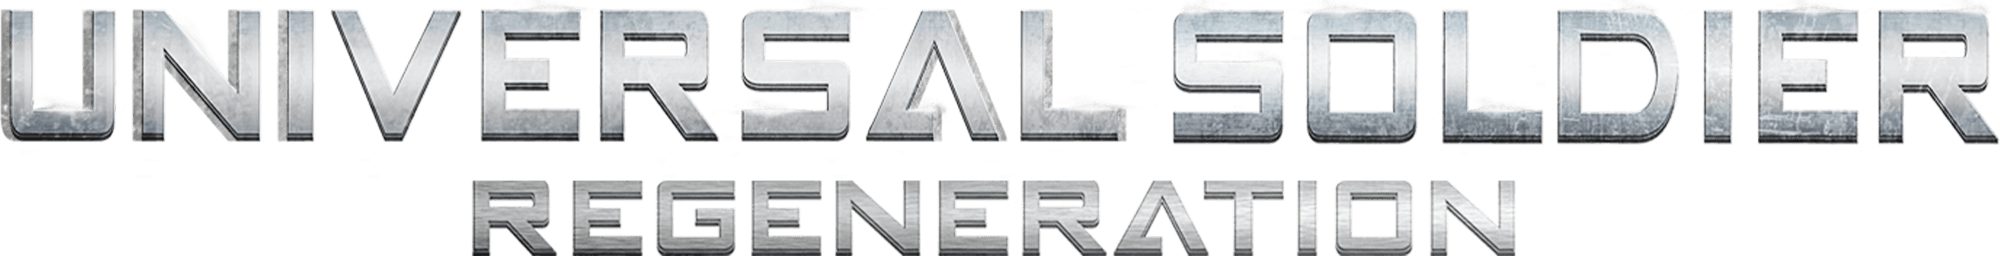 Universal Soldier: Regeneration logo